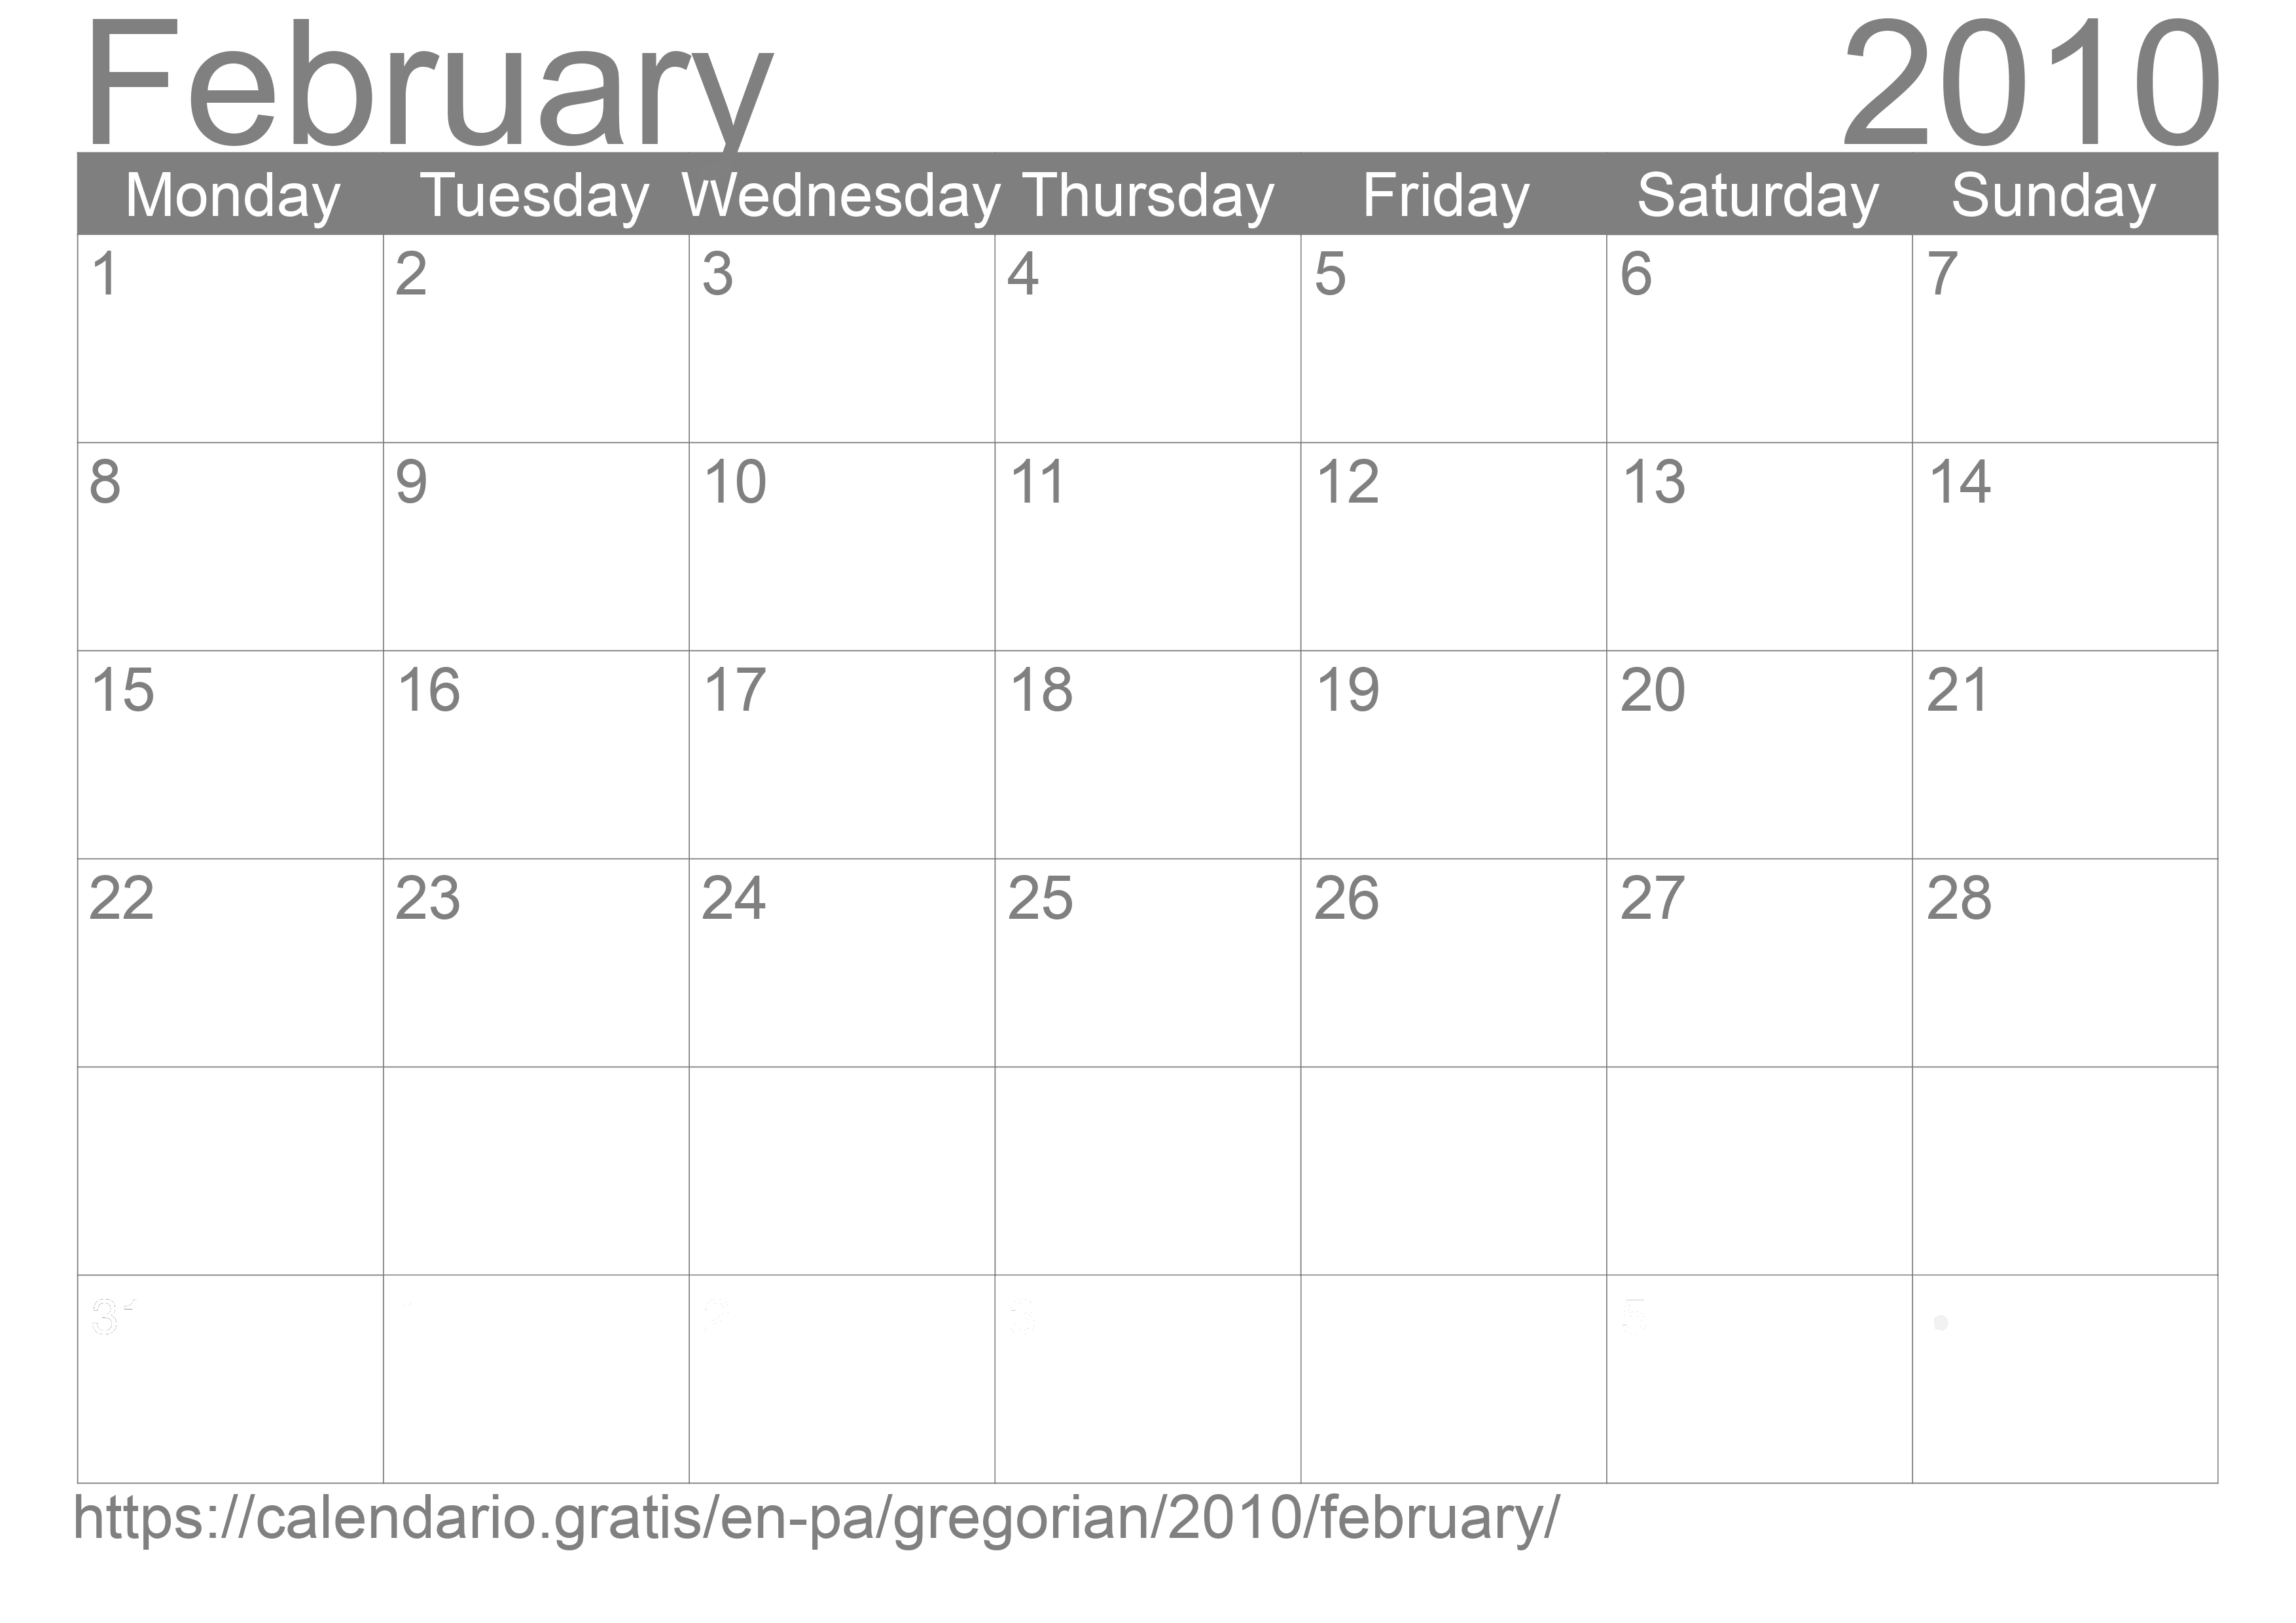 Calendar February 2010 to print